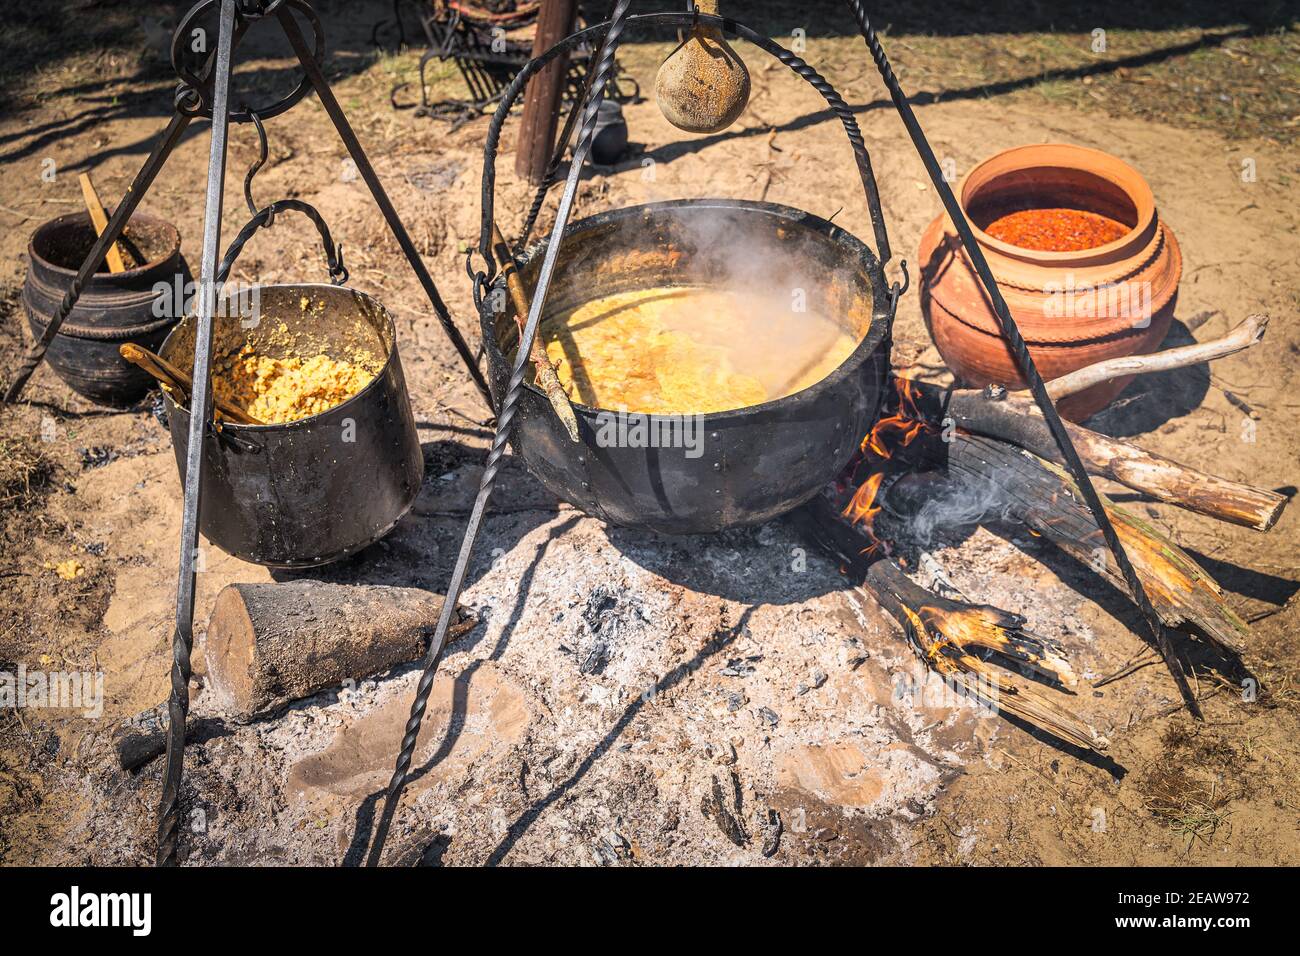 https://c8.alamy.com/comp/2EAW972/stew-in-iron-pot-on-a-campfire-homemade-food-2EAW972.jpg